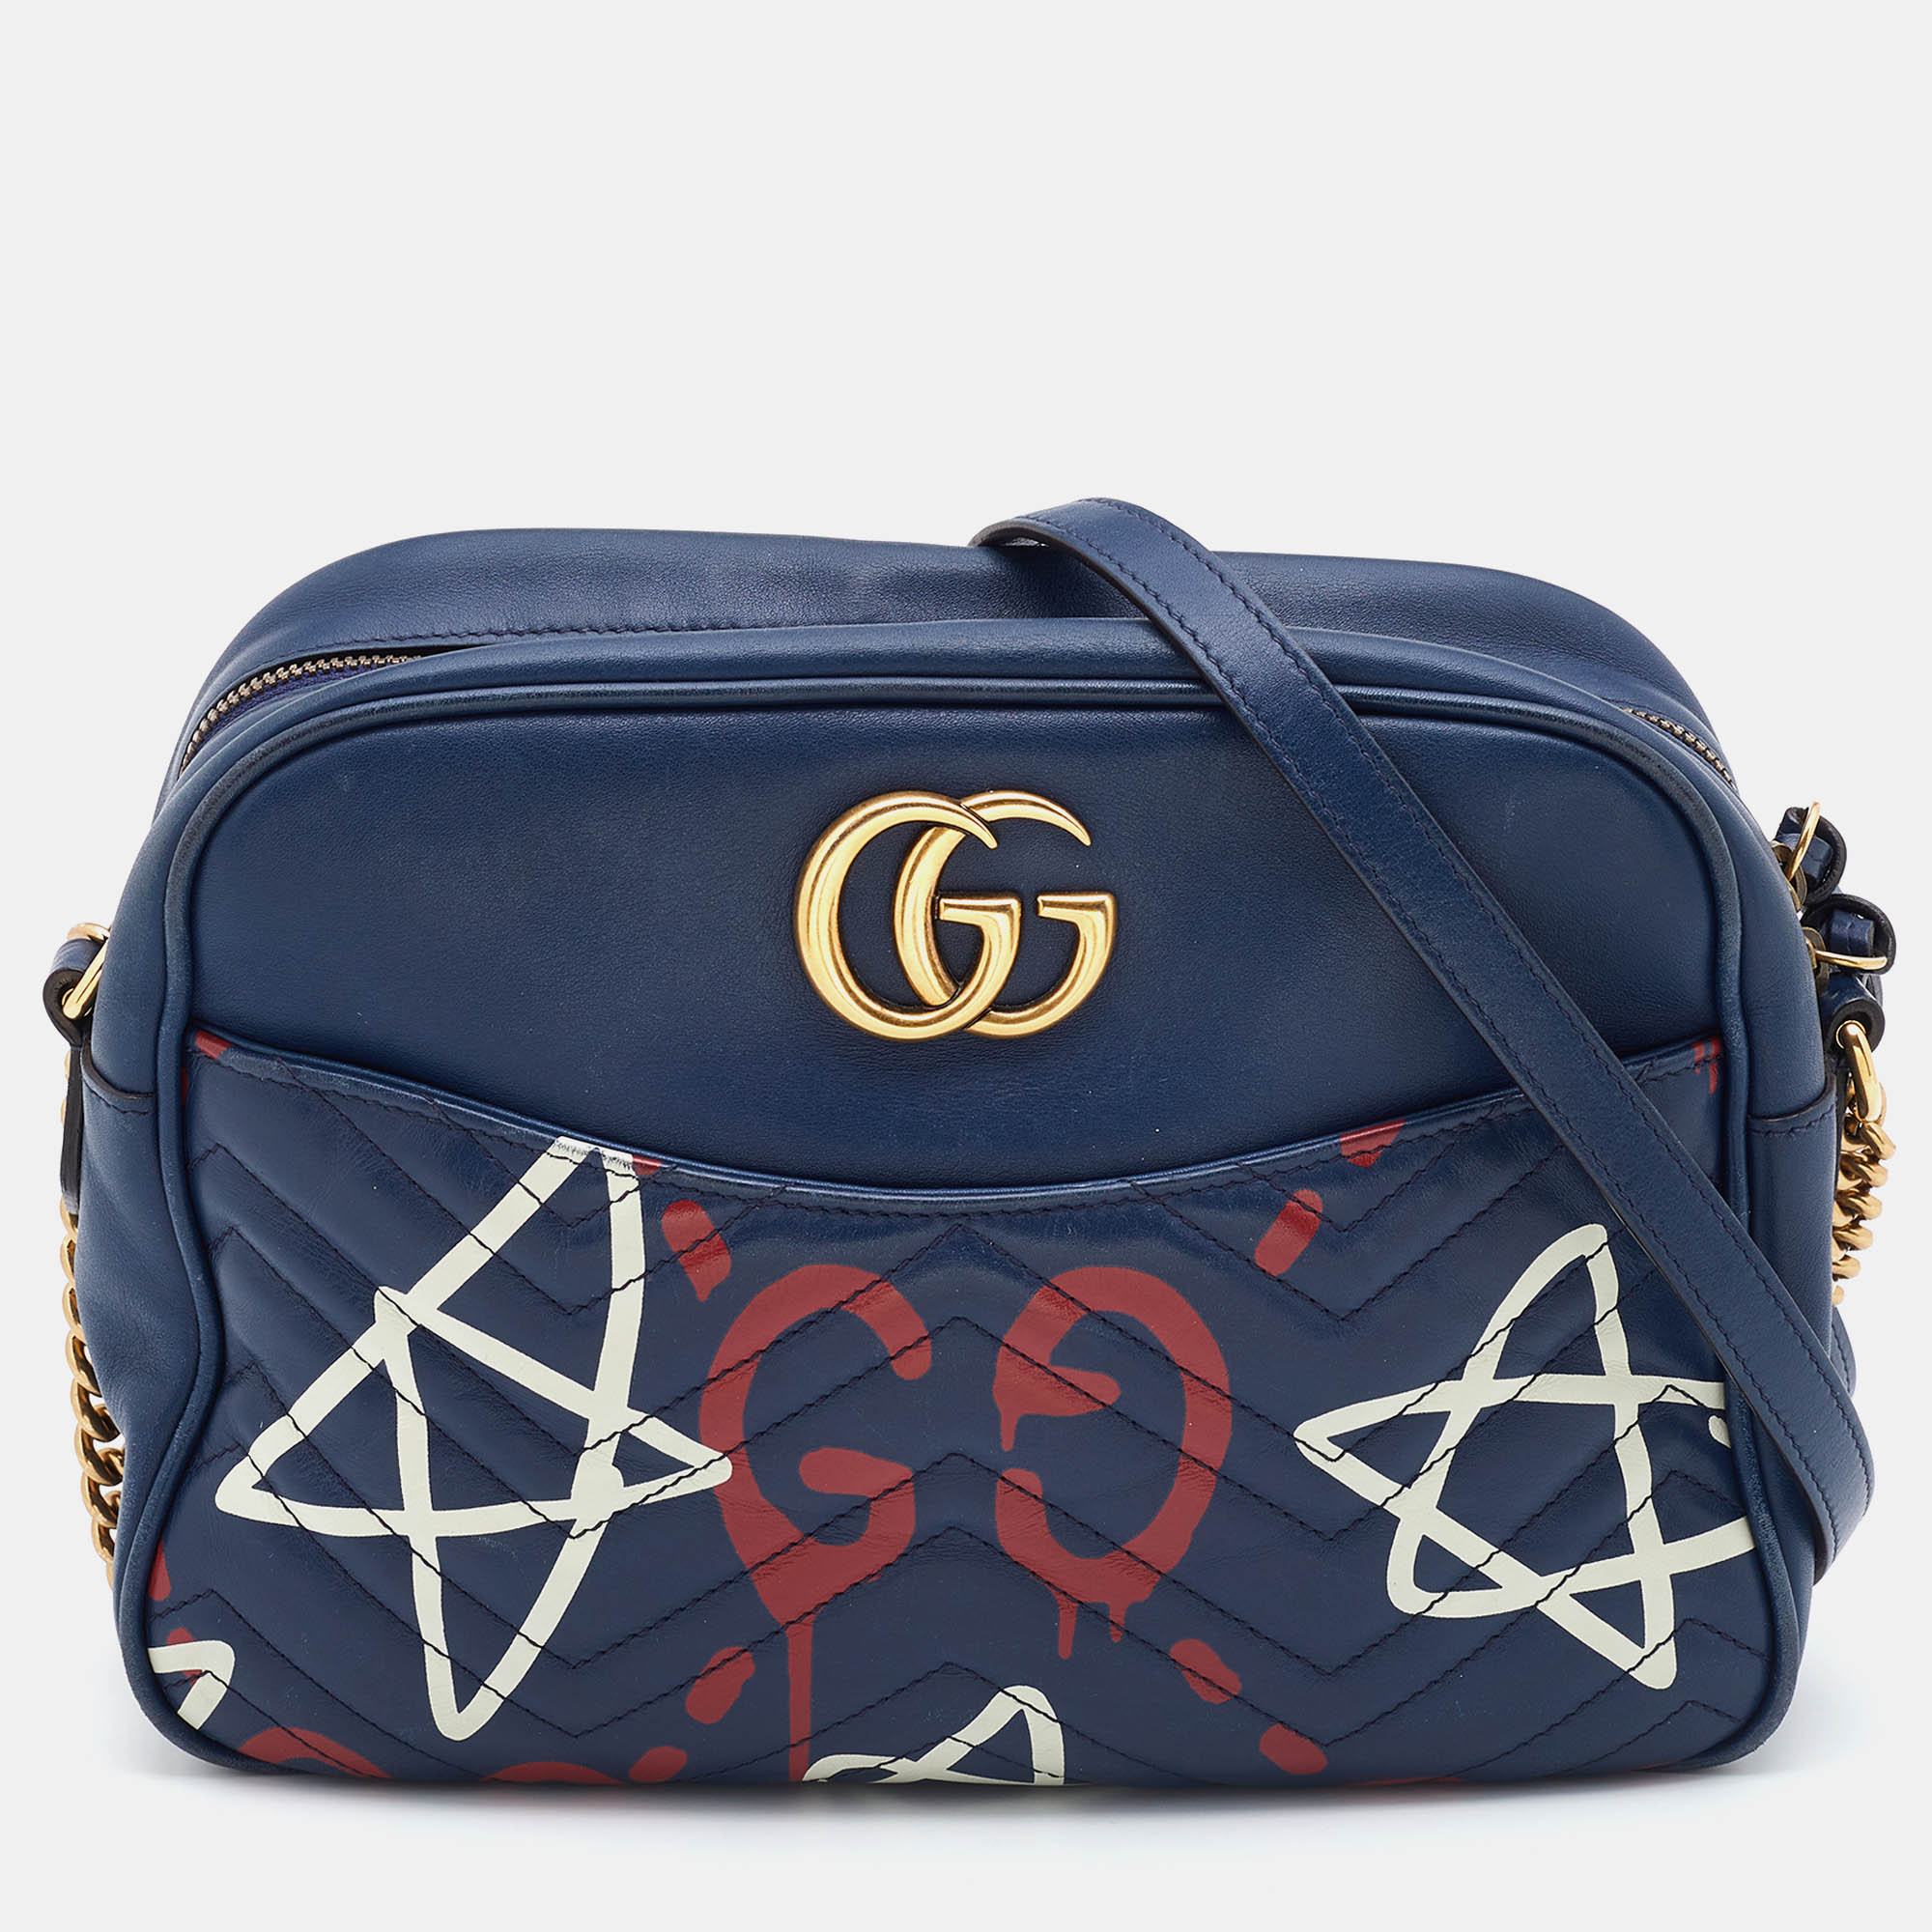 Gucci Blue Graffiti Leather GG Marmont Gucci Ghost Shoulder Bag